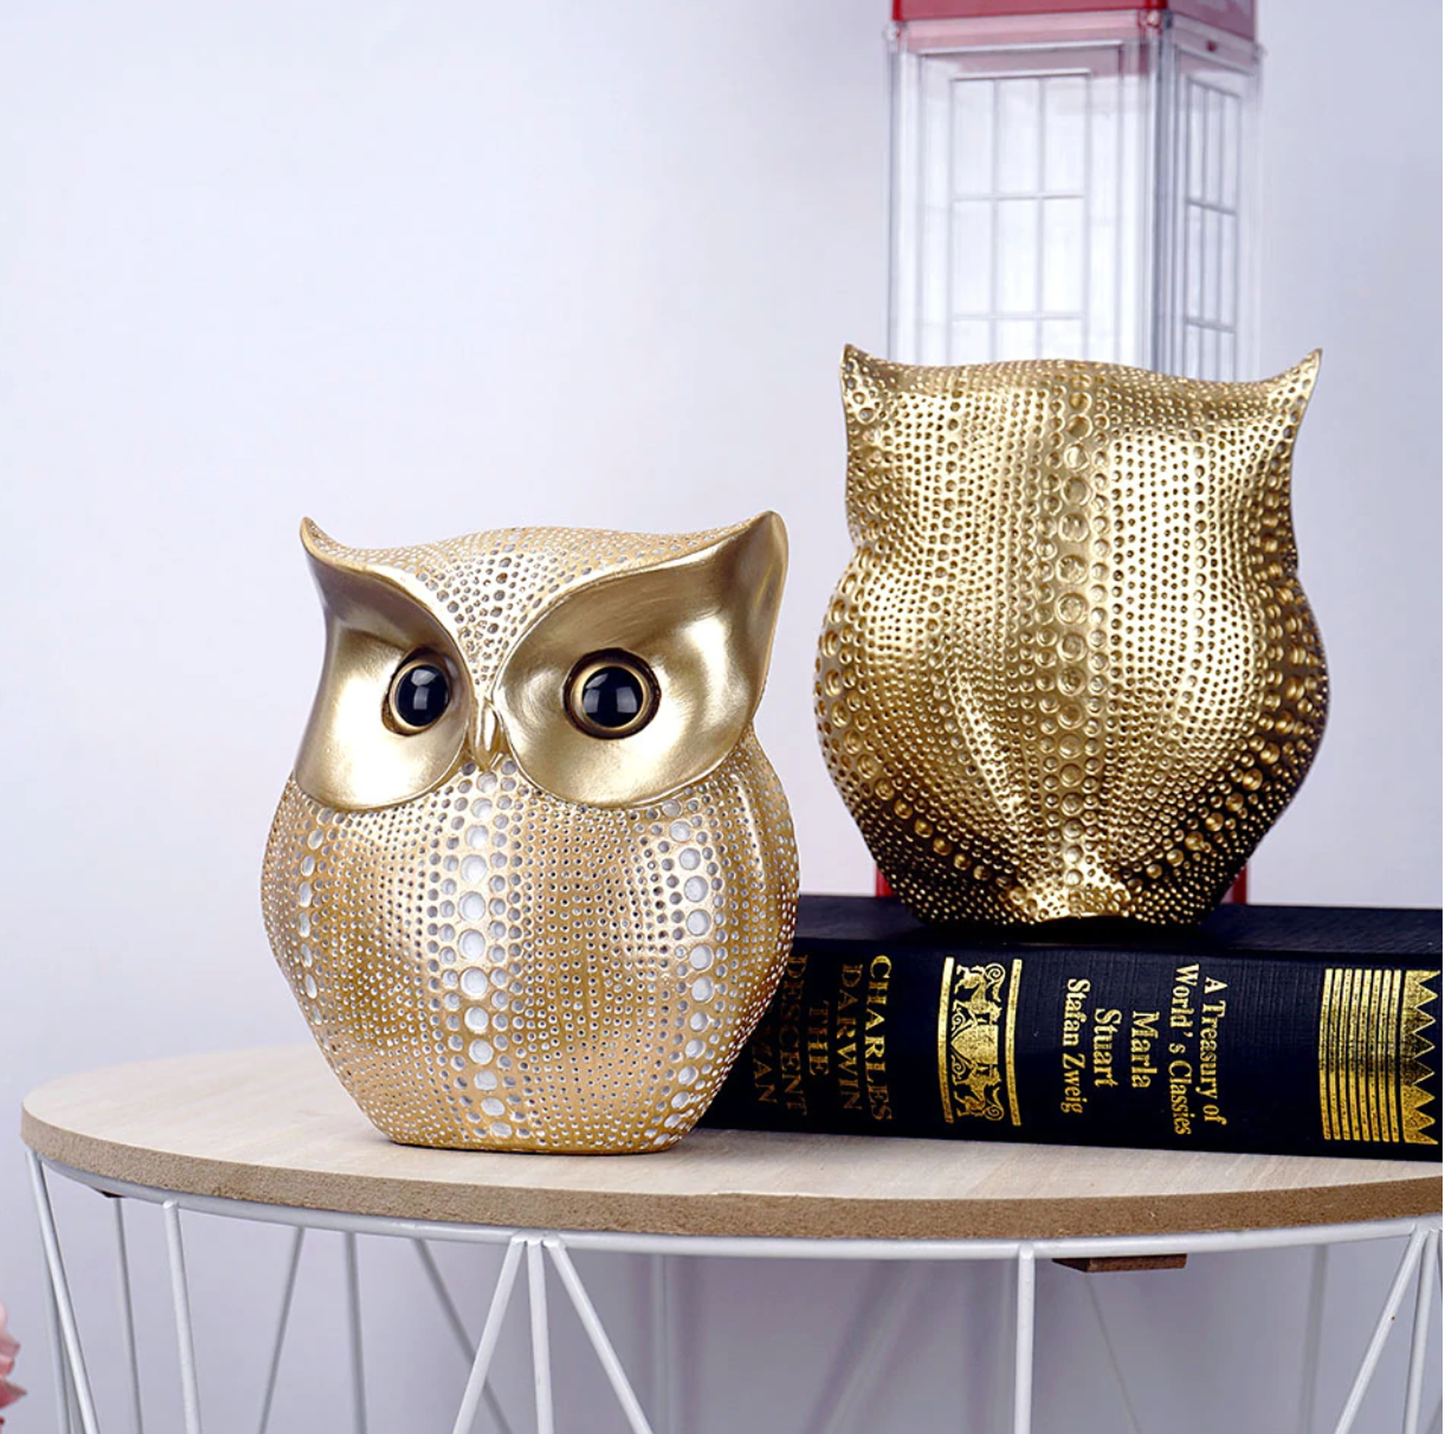 Golden Owl Sculpture's